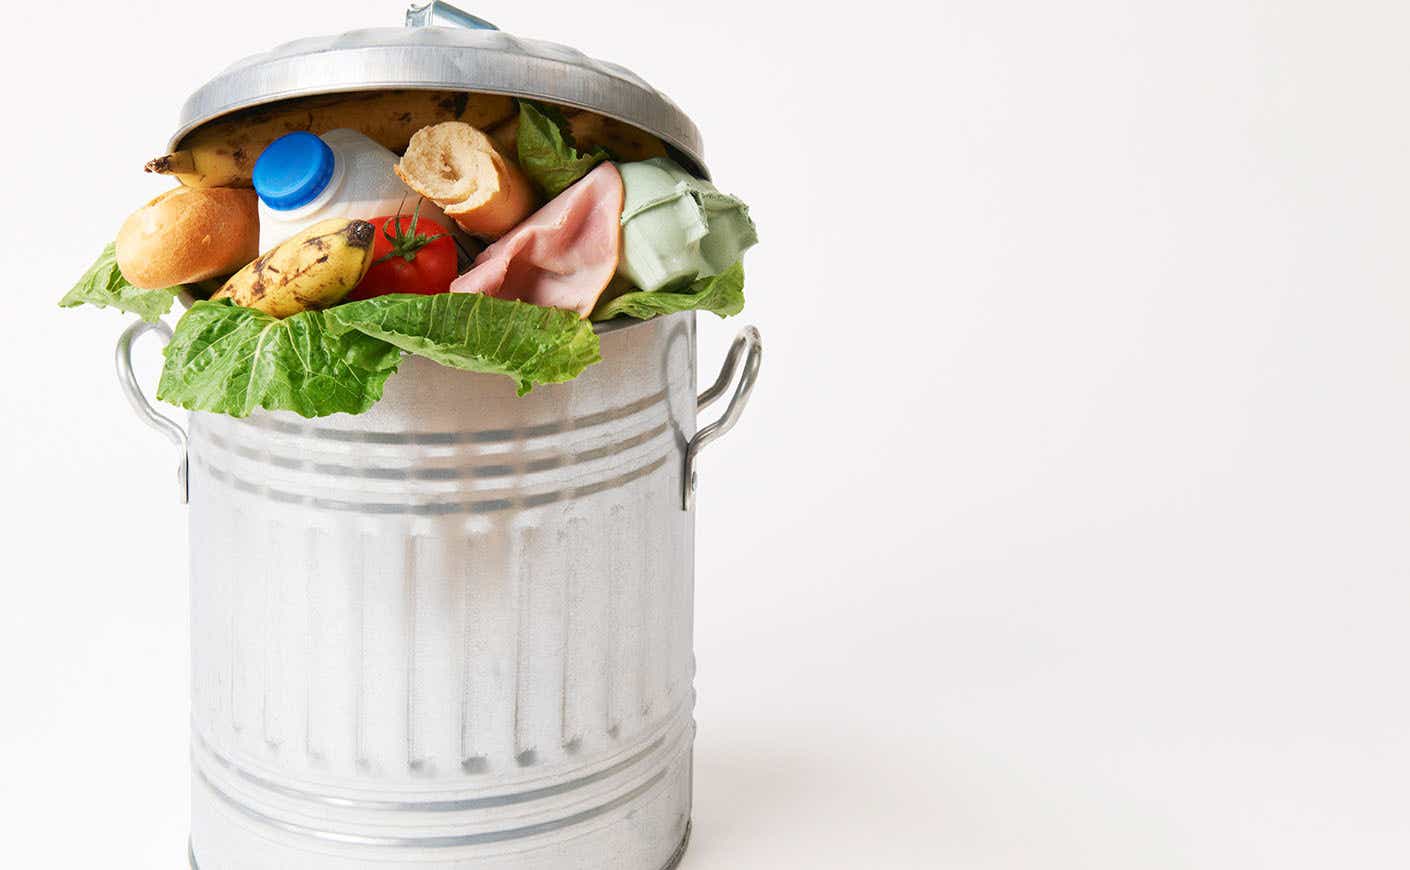 Food waste trash can